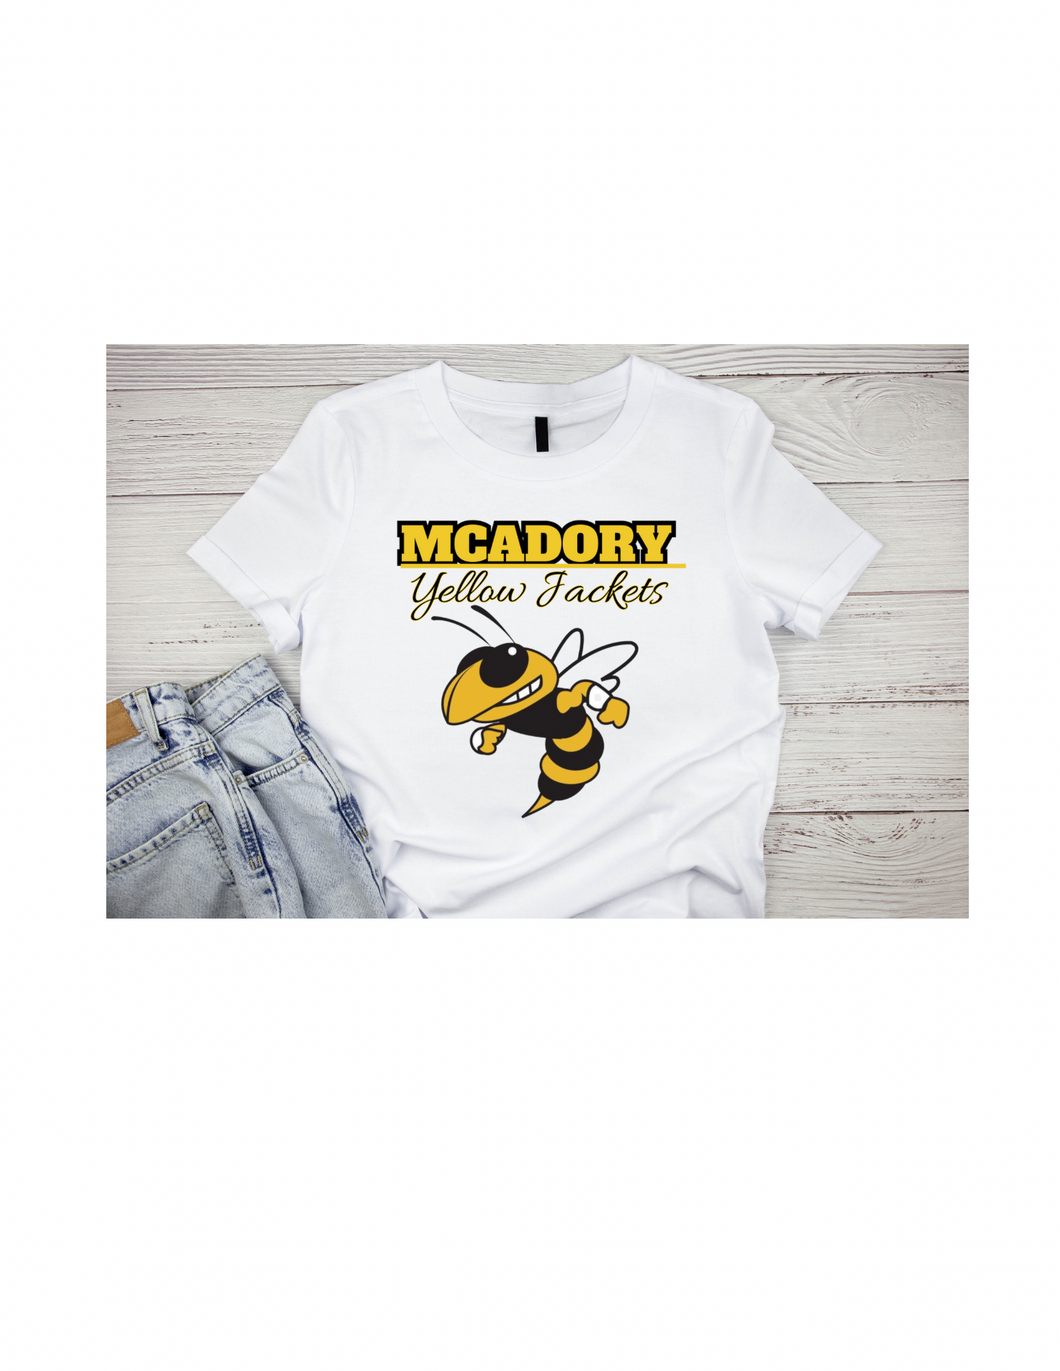 McAdory Yellow Jackets Tee